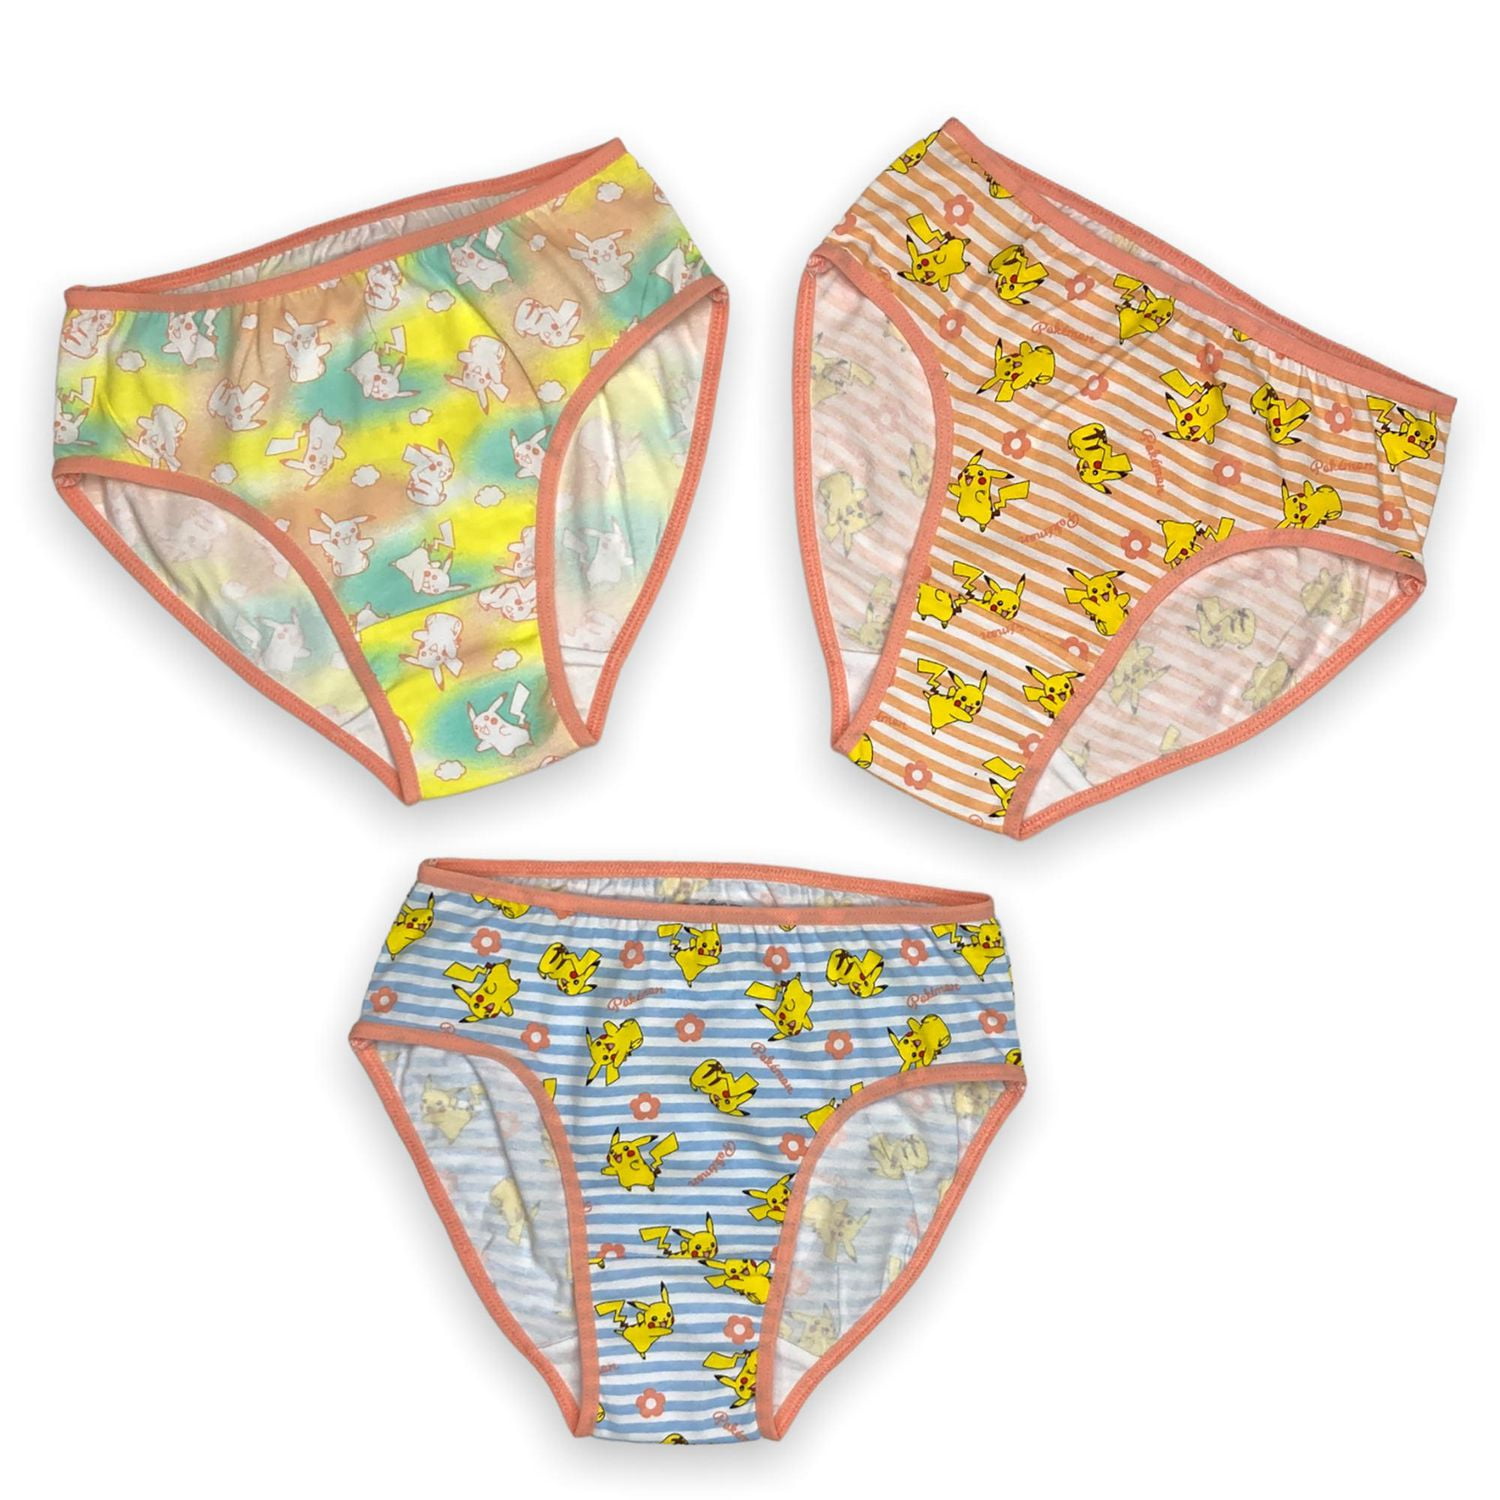 5 Pieces of Women's Sexy Panties Underpants Elastic Band